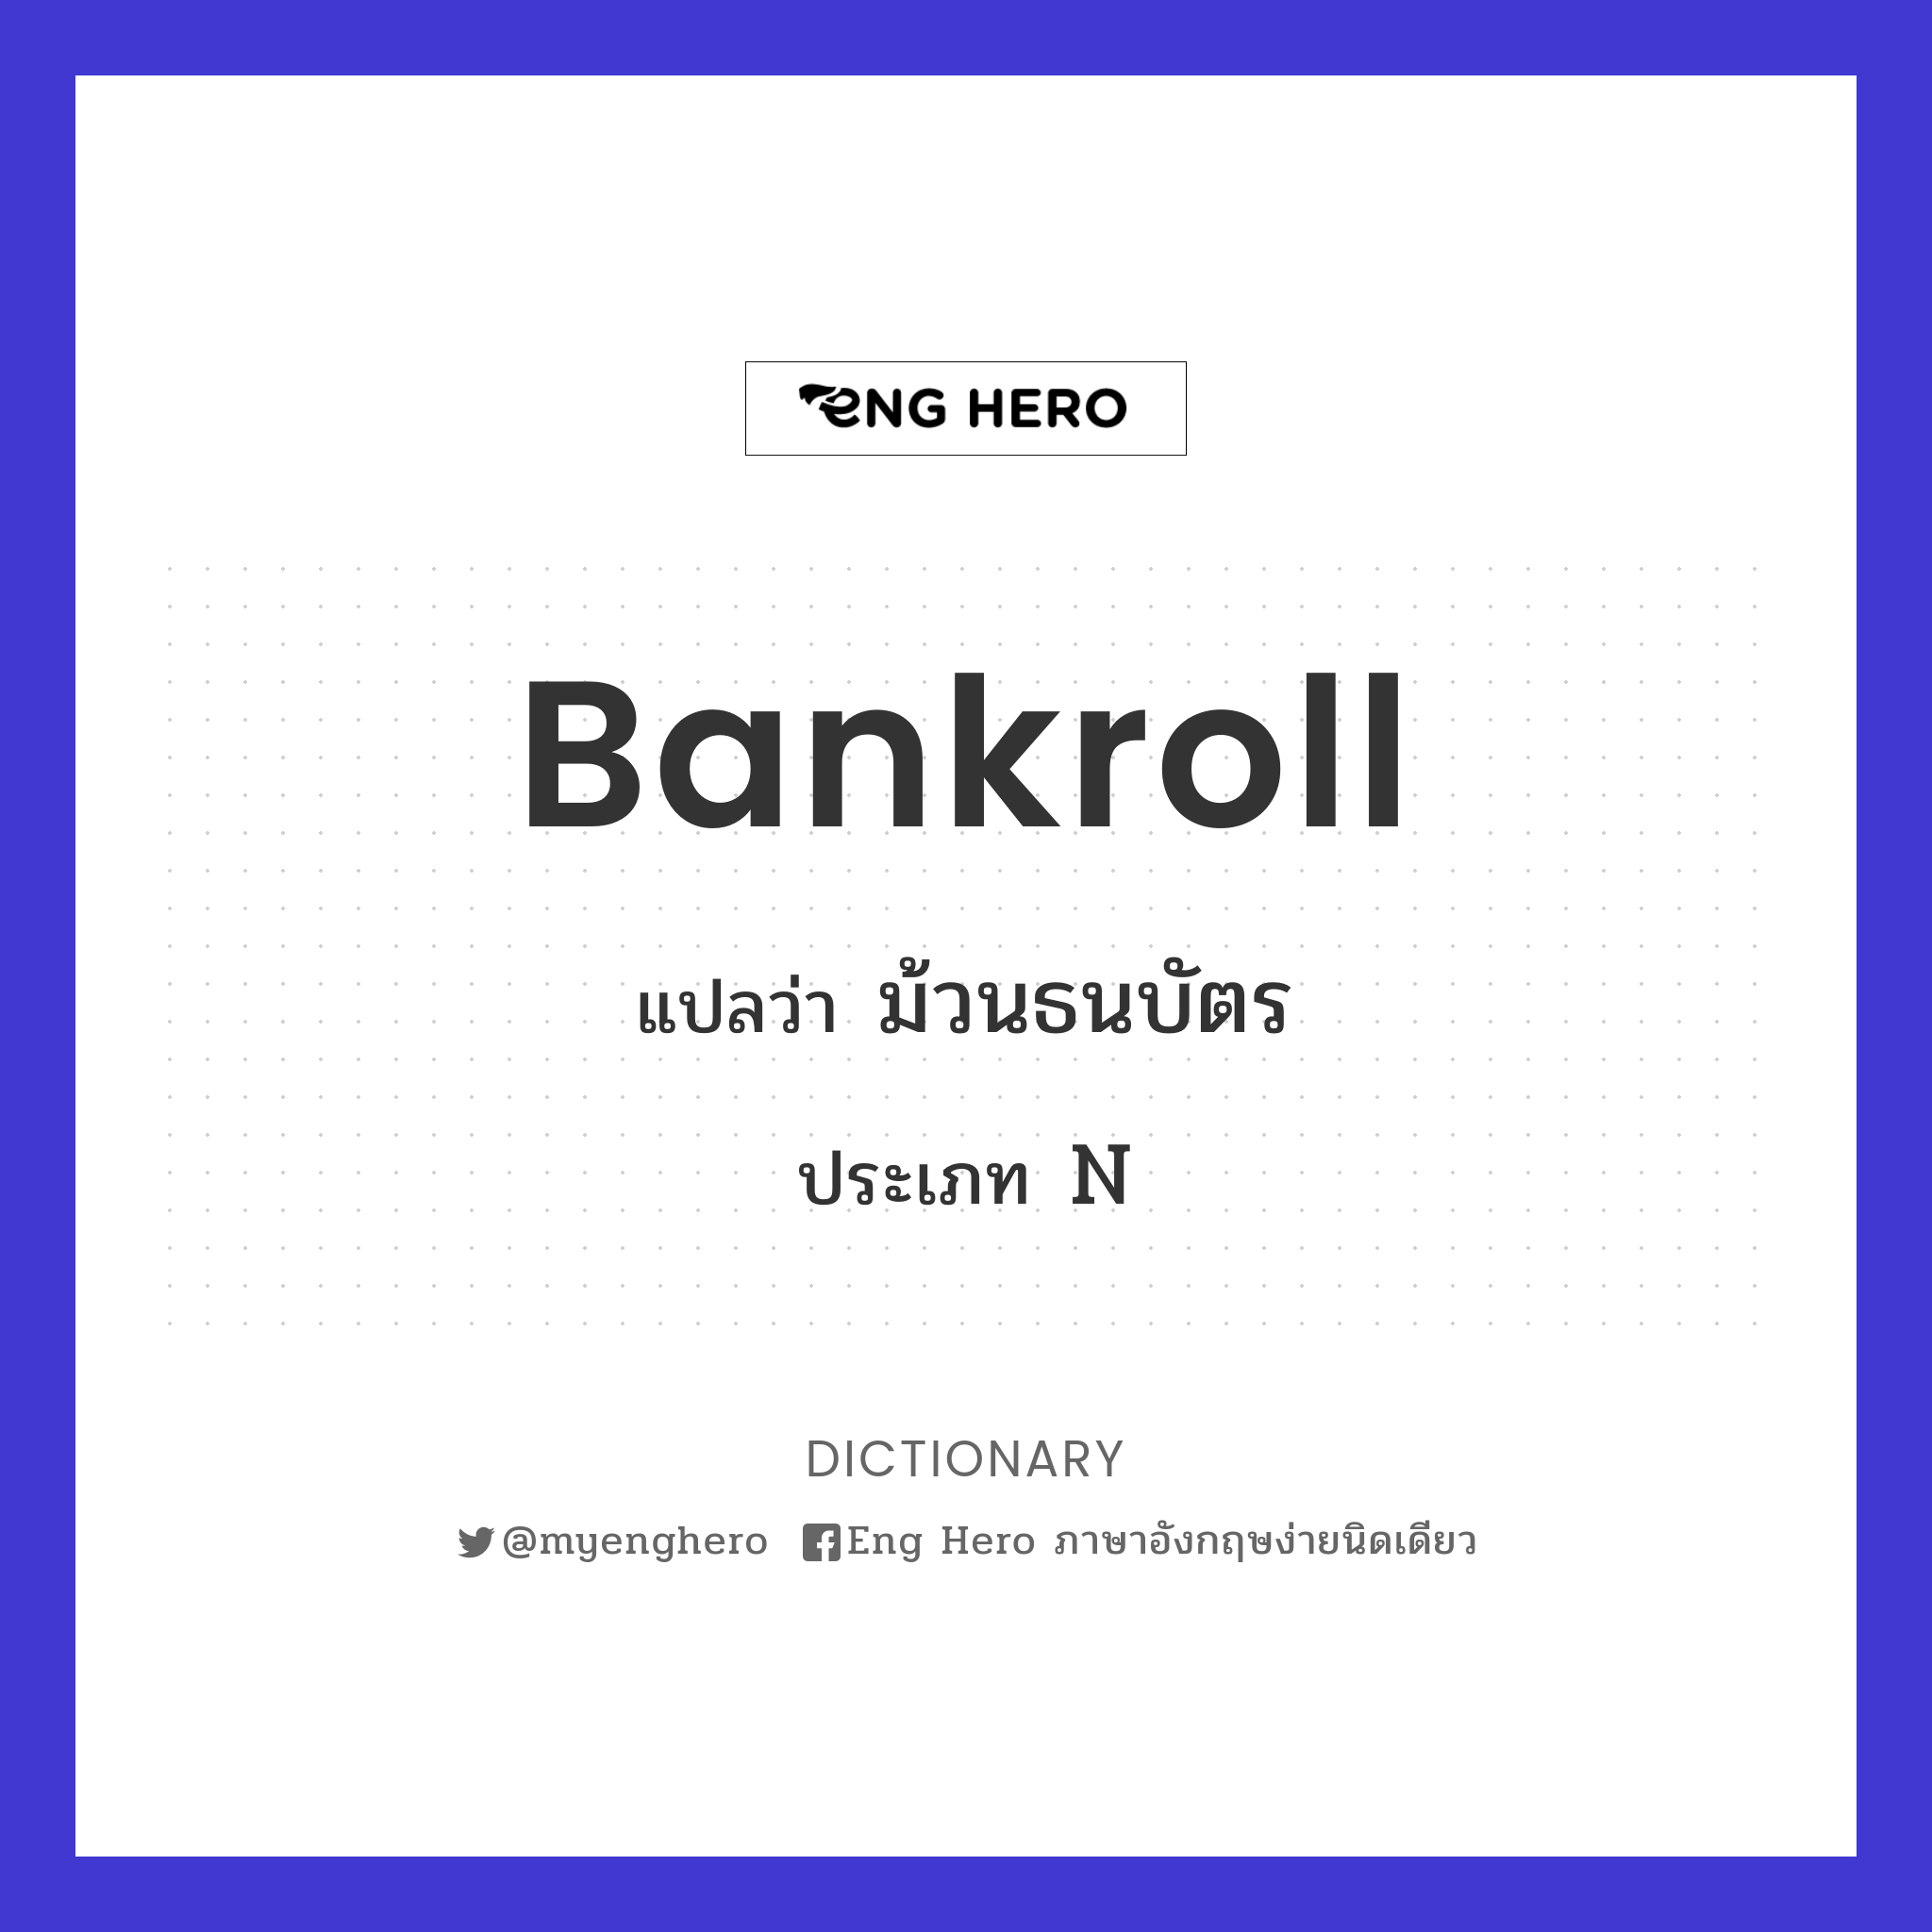 bankroll